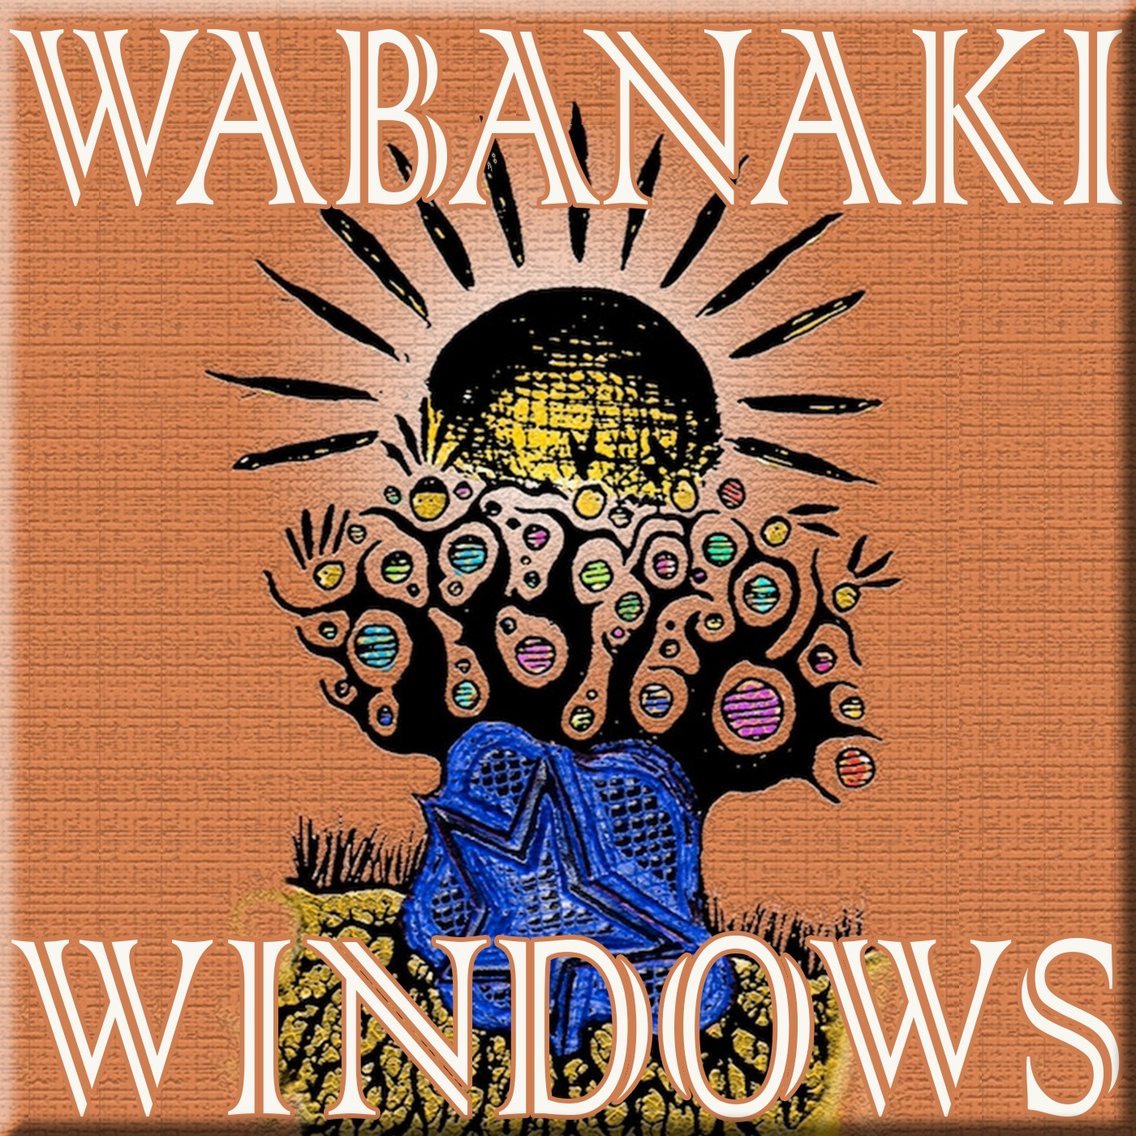 Wabanaki Windows - Cover Image